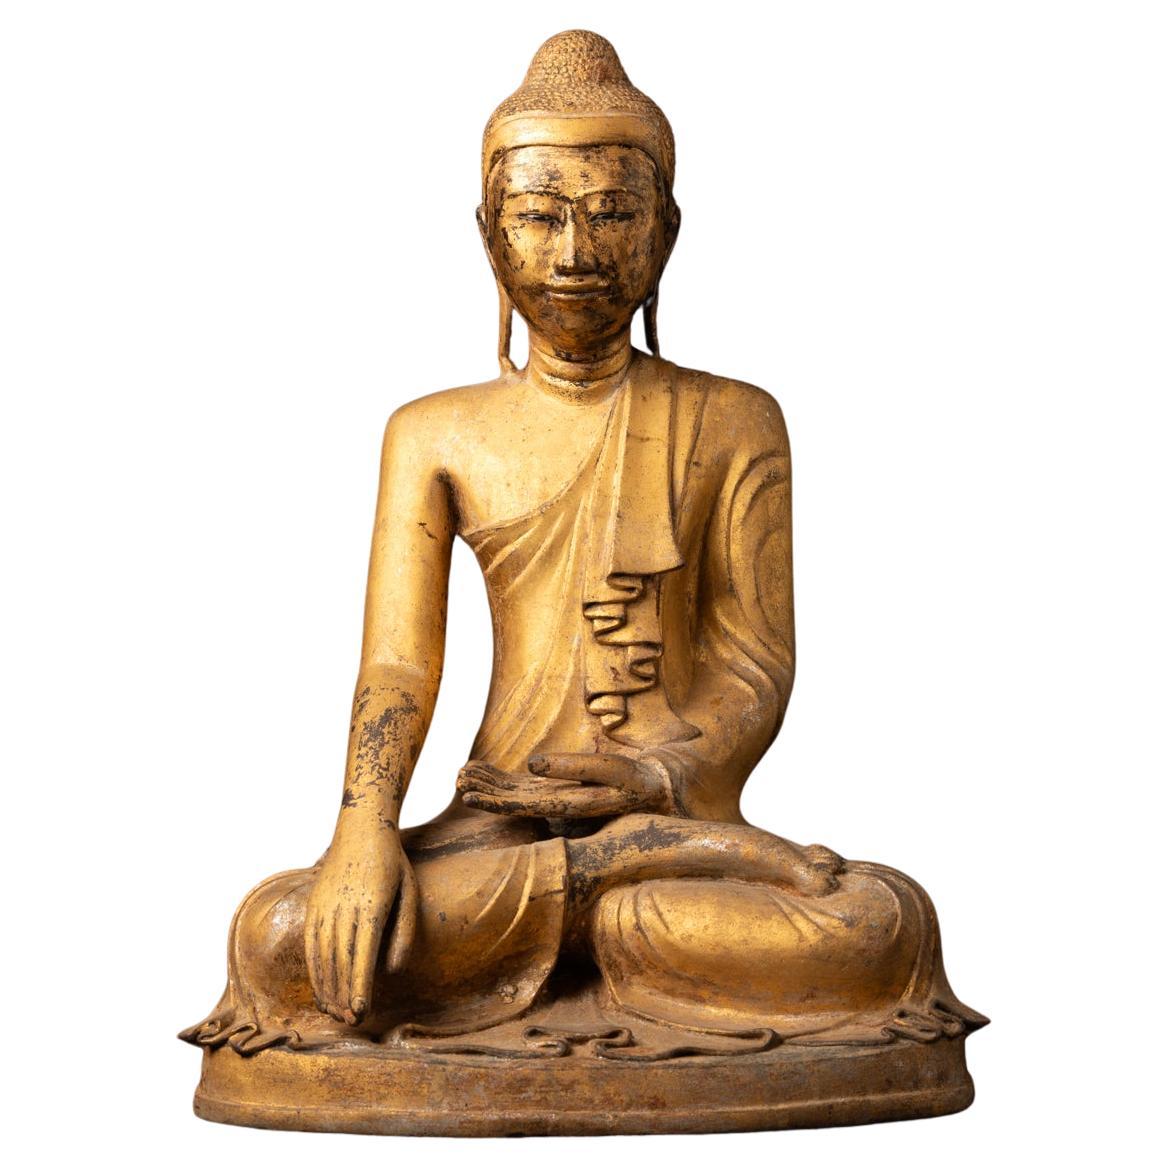 Antiker burmesischer Mandalay-Buddha aus Bronze des 19. Jahrhunderts in Bhumisparsha Mudra